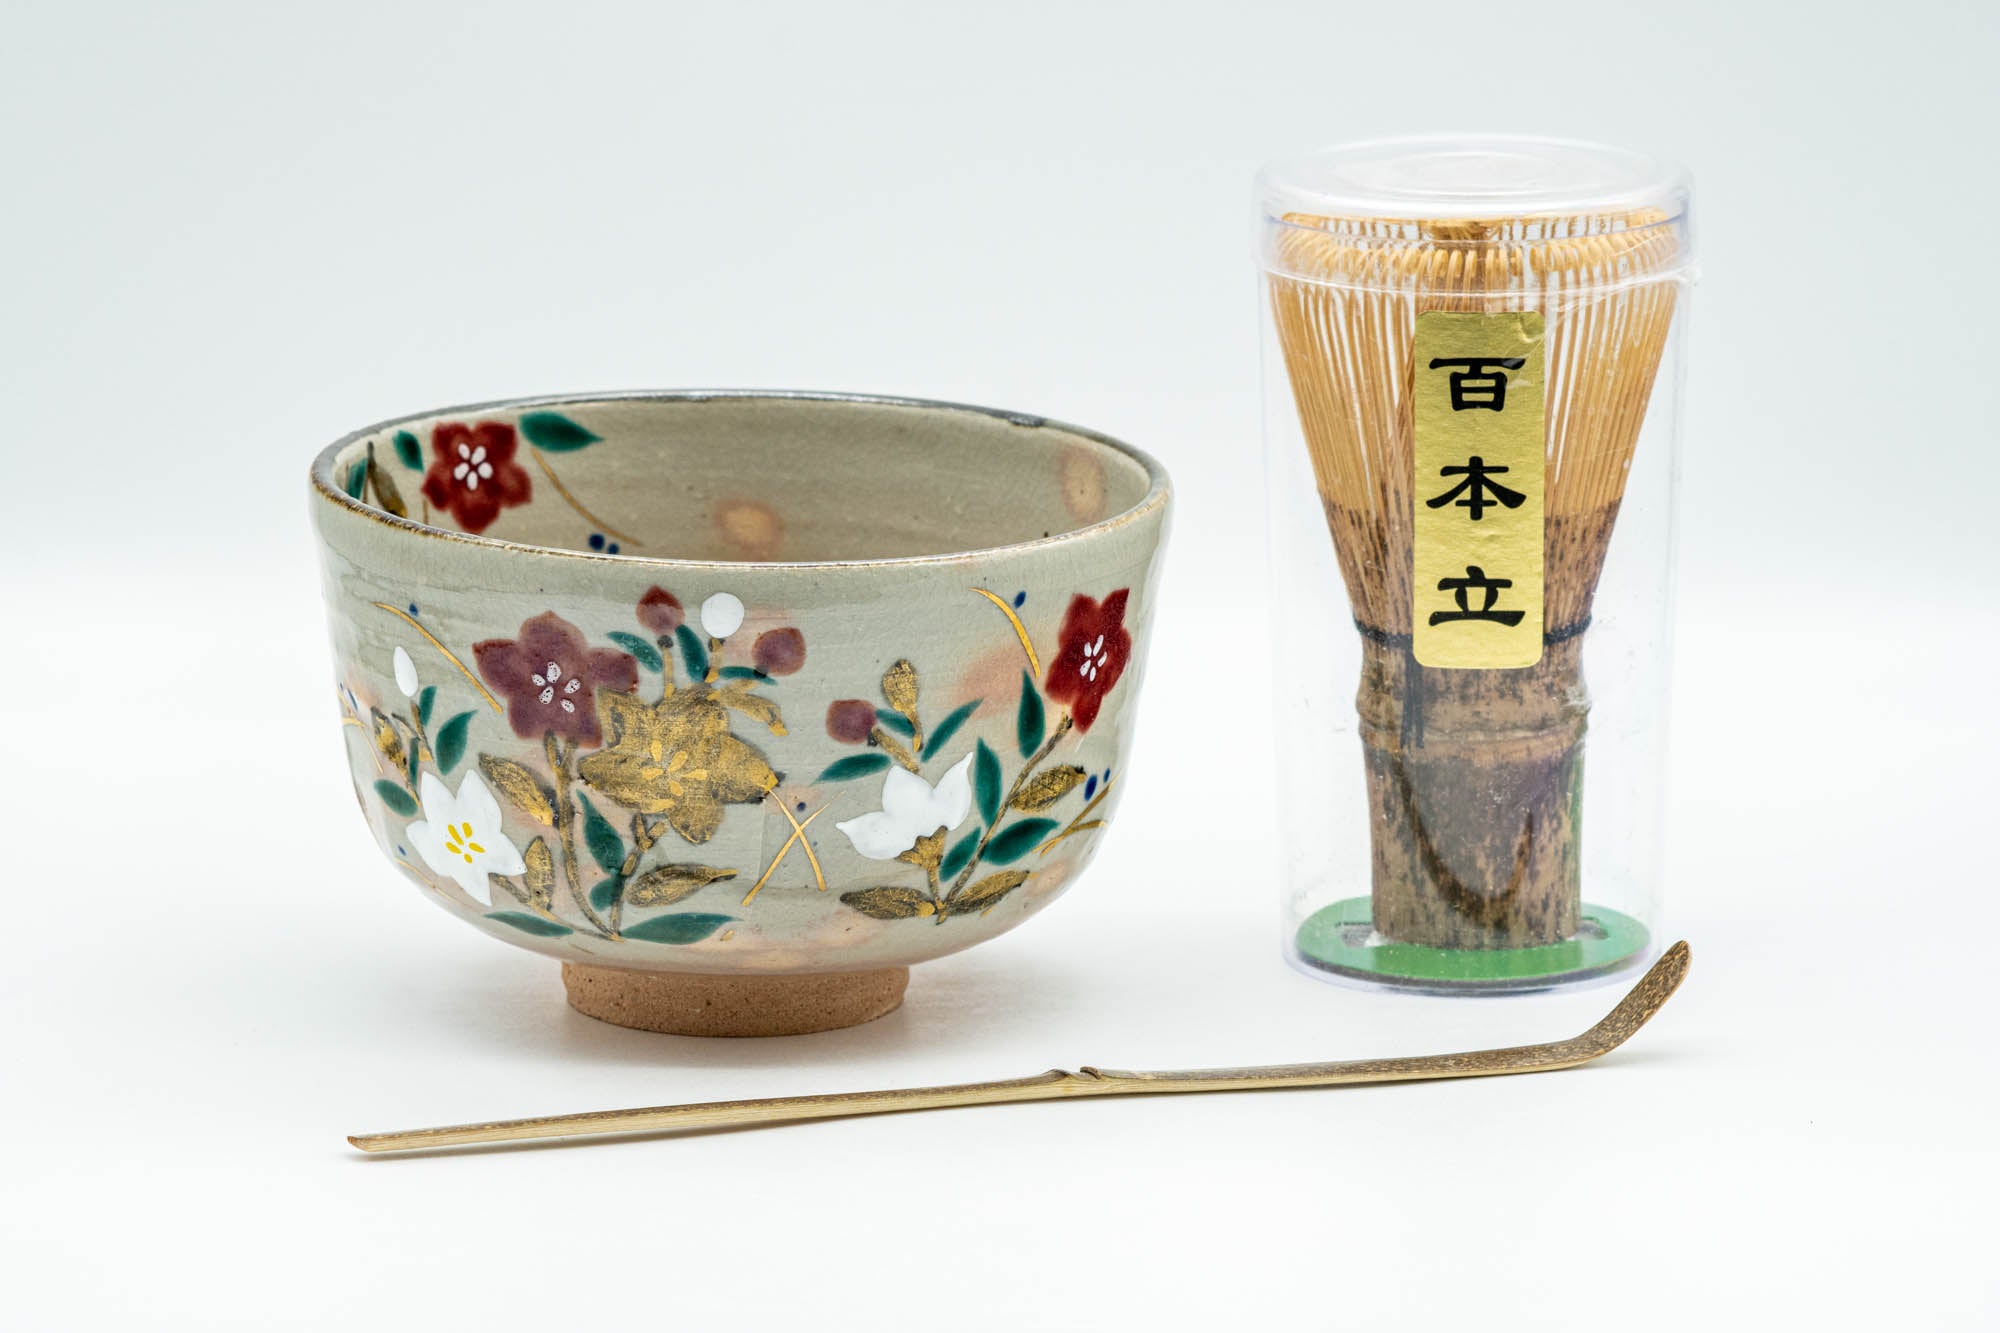 Japanese Matcha Set - 田中香泉 Tanaka Kousen Floral Kyo-yaki Chawan with Bamboo Chasen Whisk and Chashaku Scoop - 350ml